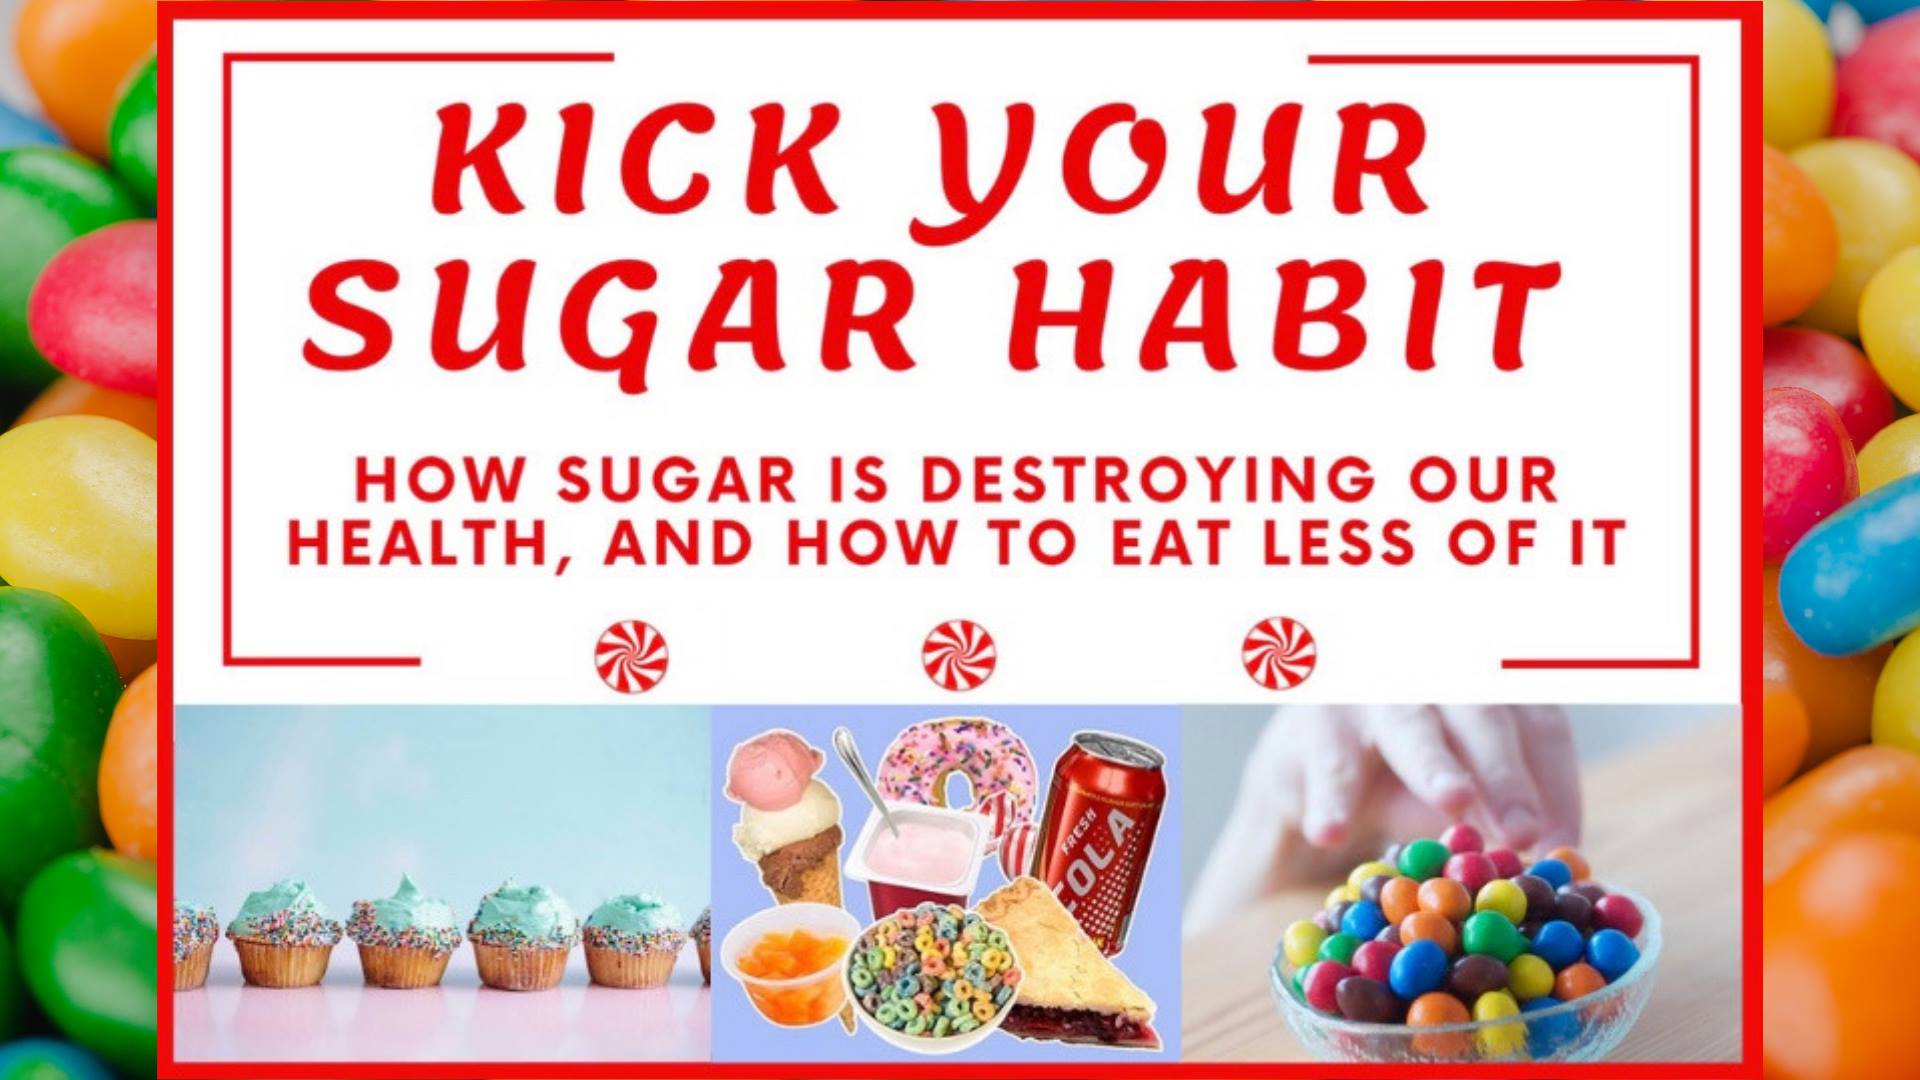 Kick your sugar habit event in Lyndonville, VT